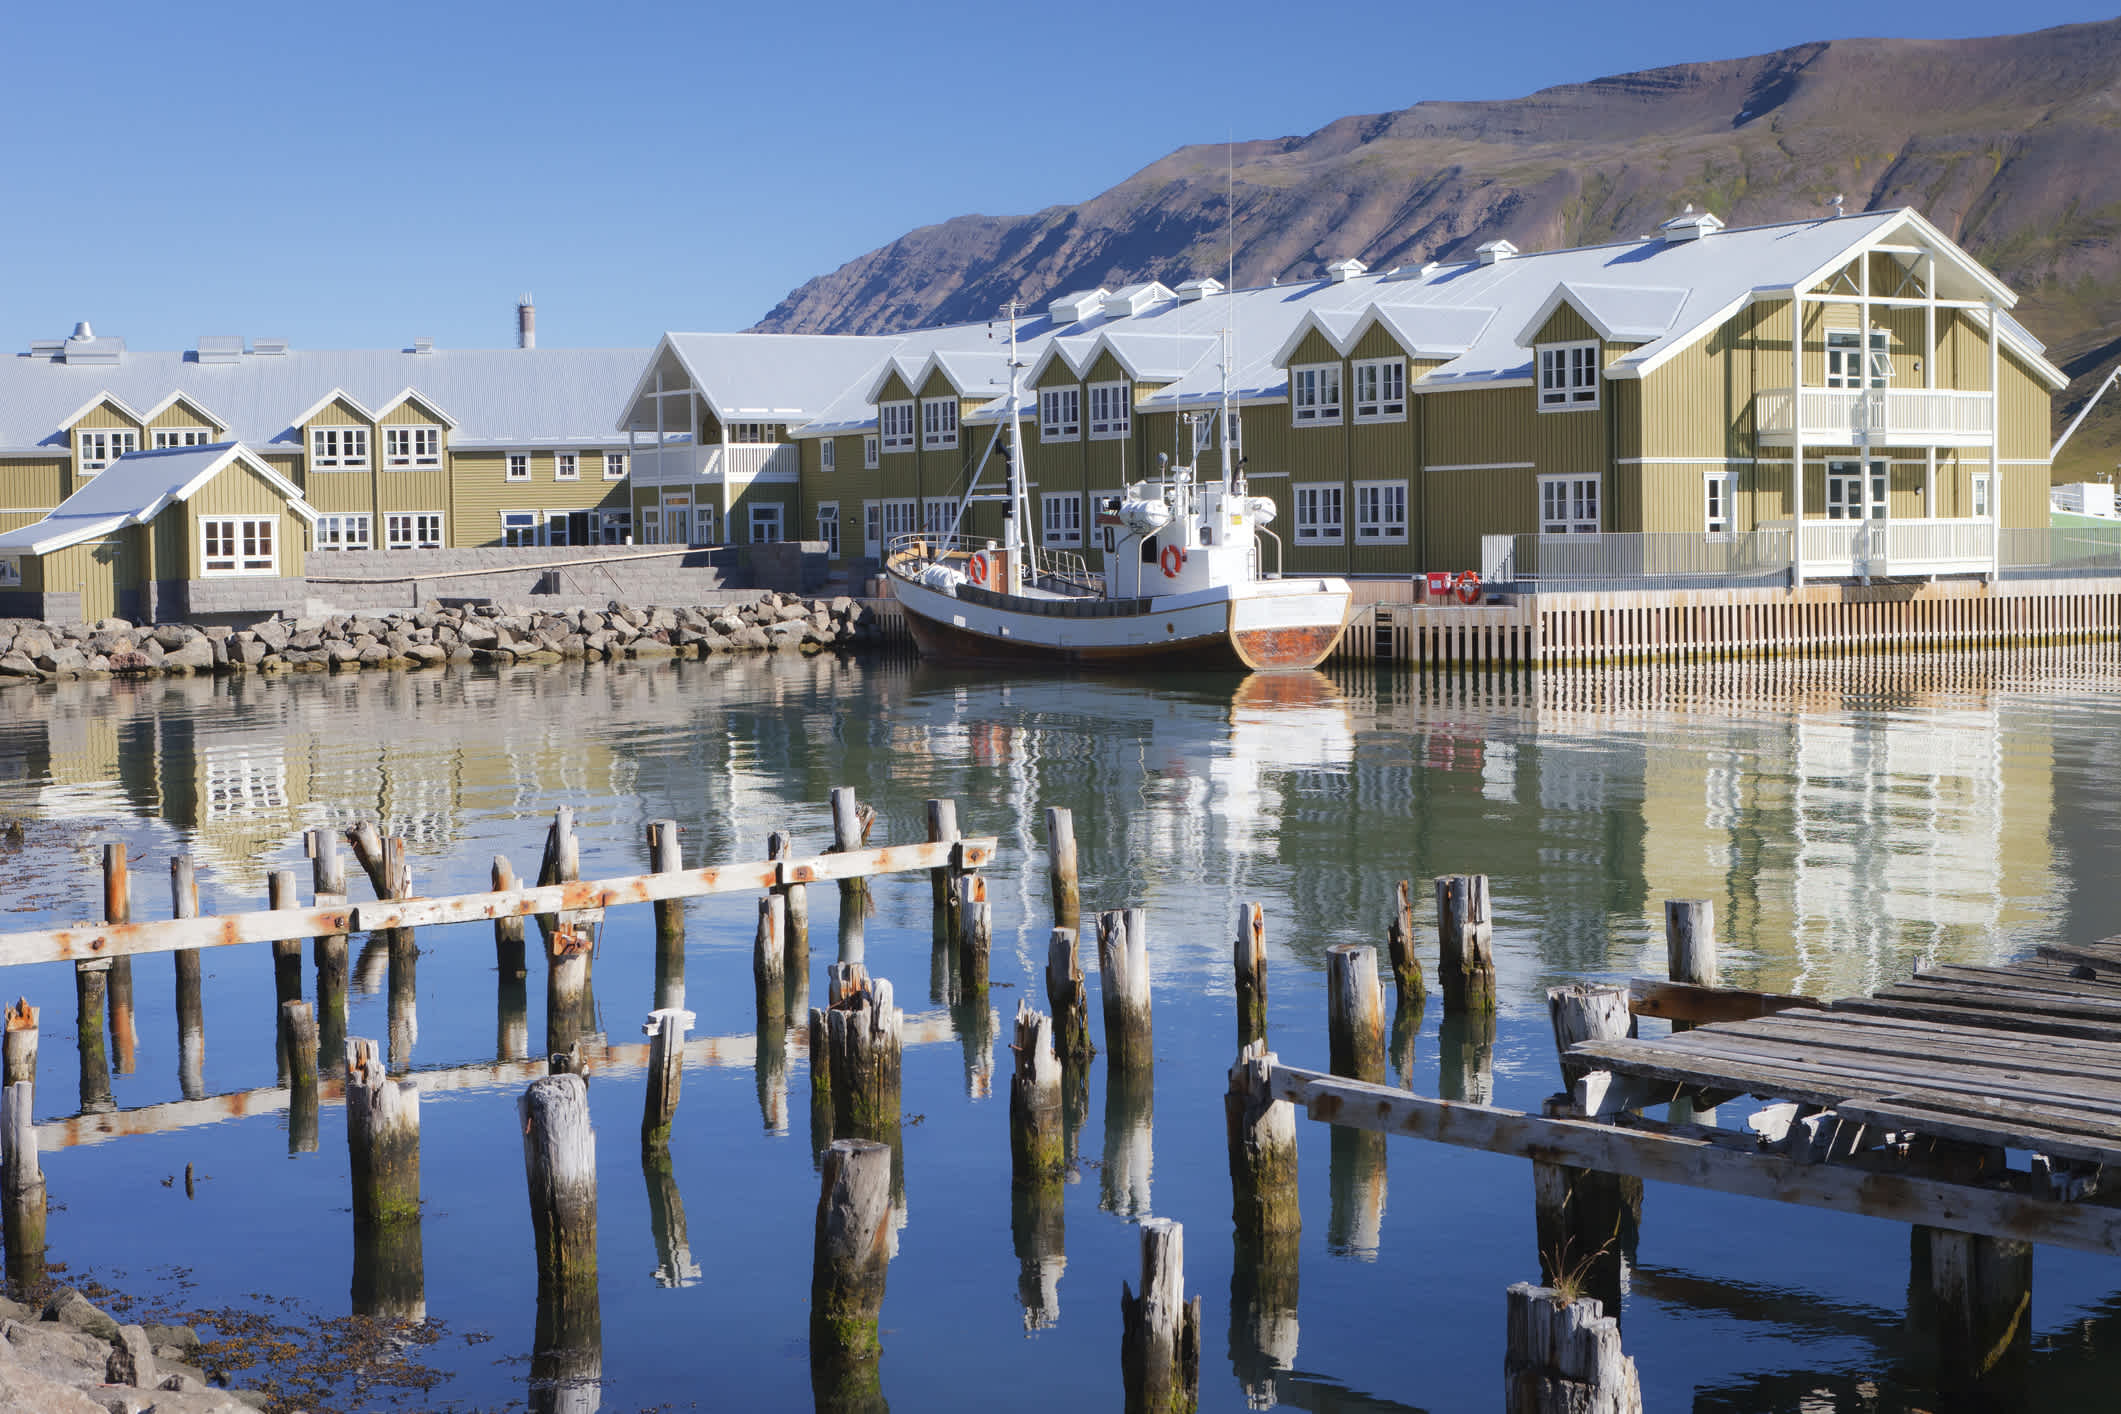 Village de pêcheurs de Siglufjörður, sur la côte nord de l'Islande.
